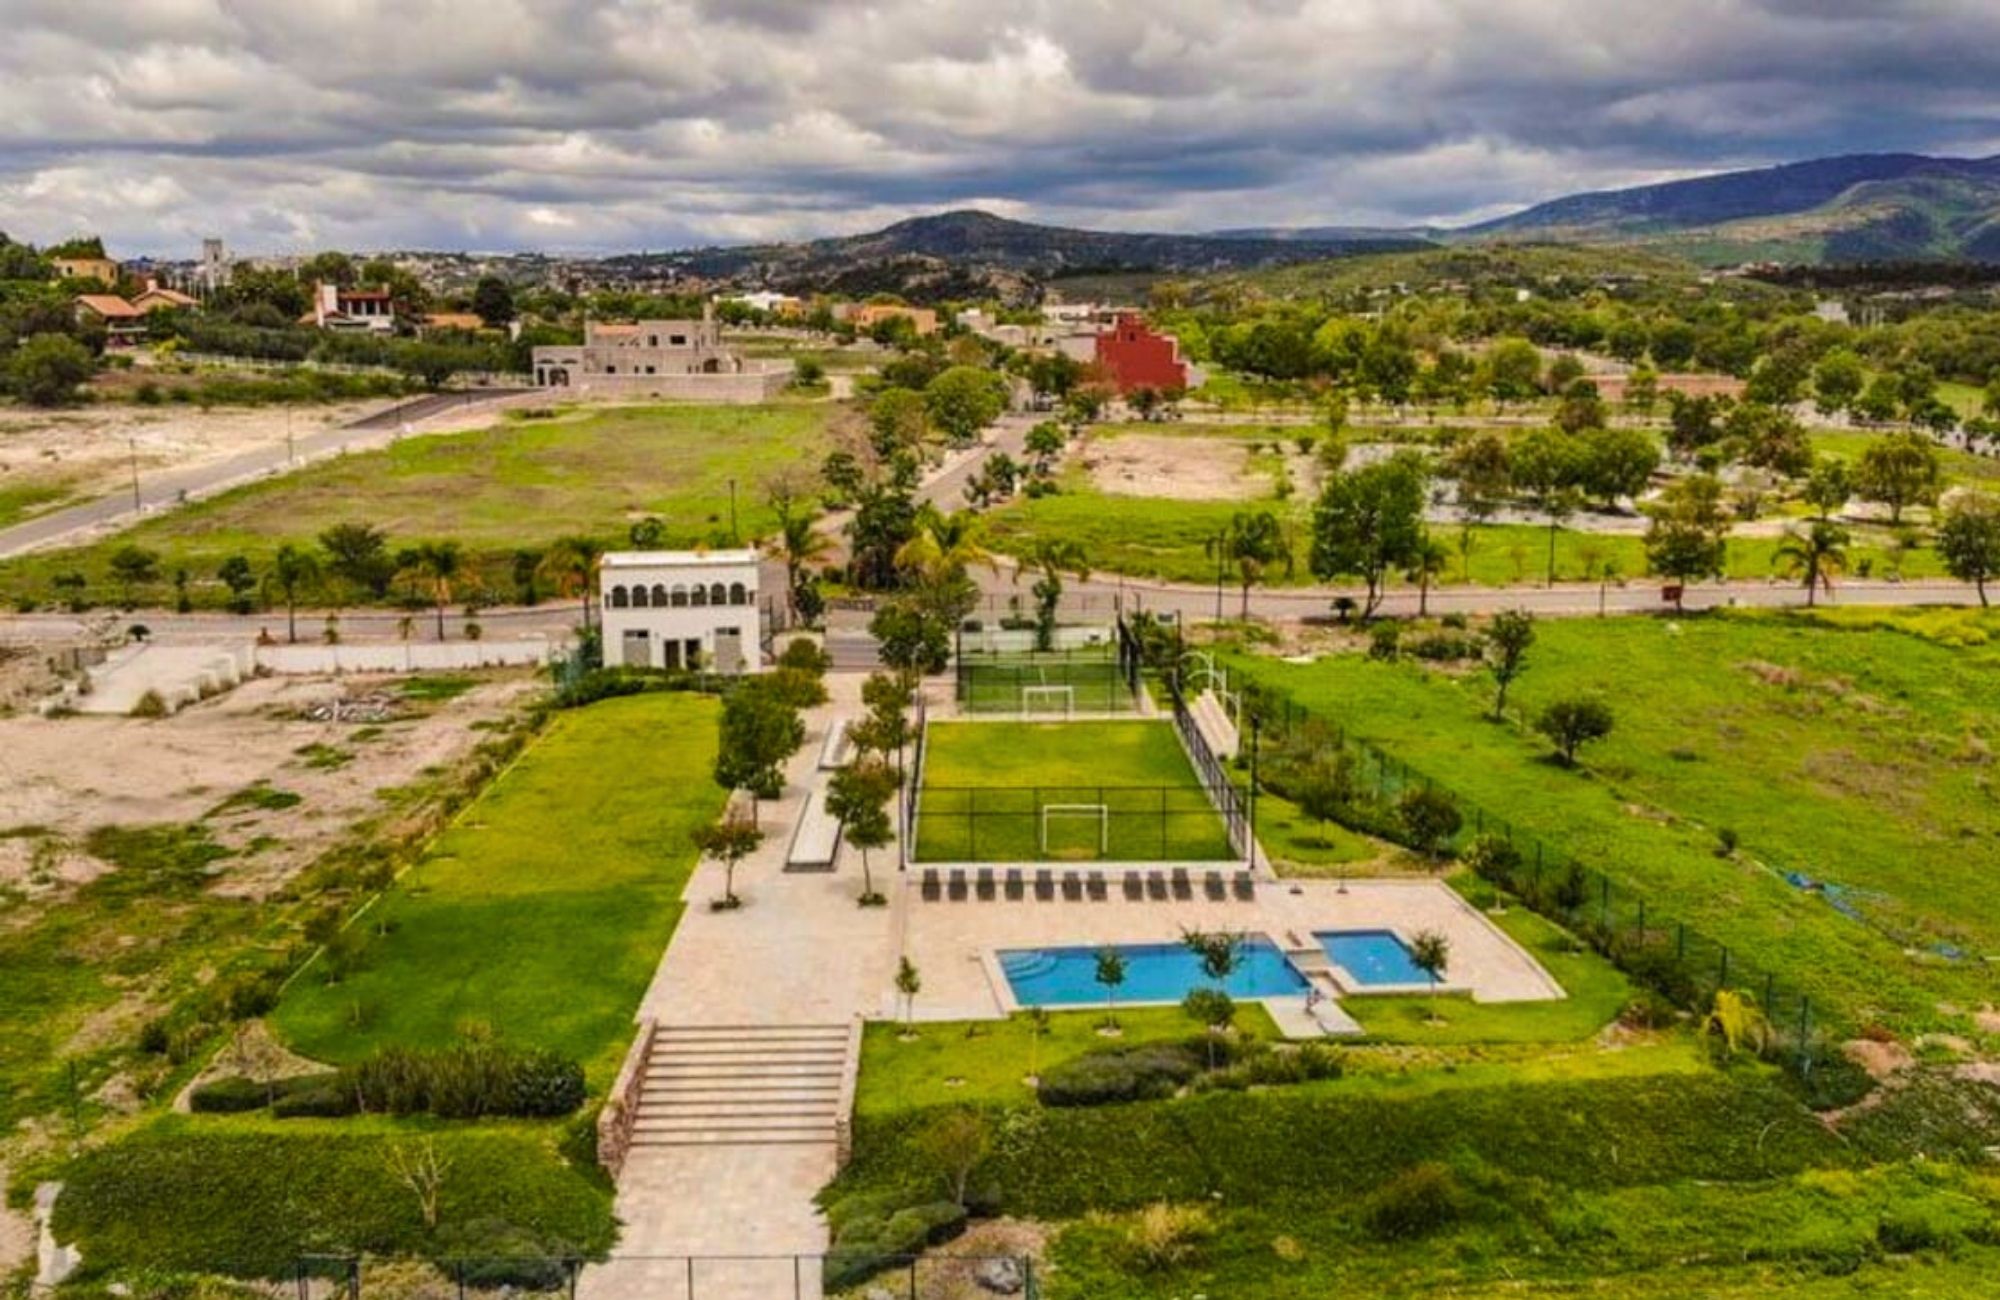 670 sqm lot, pool, gym, jacuzzi, for sale in San Miguel de Allende.